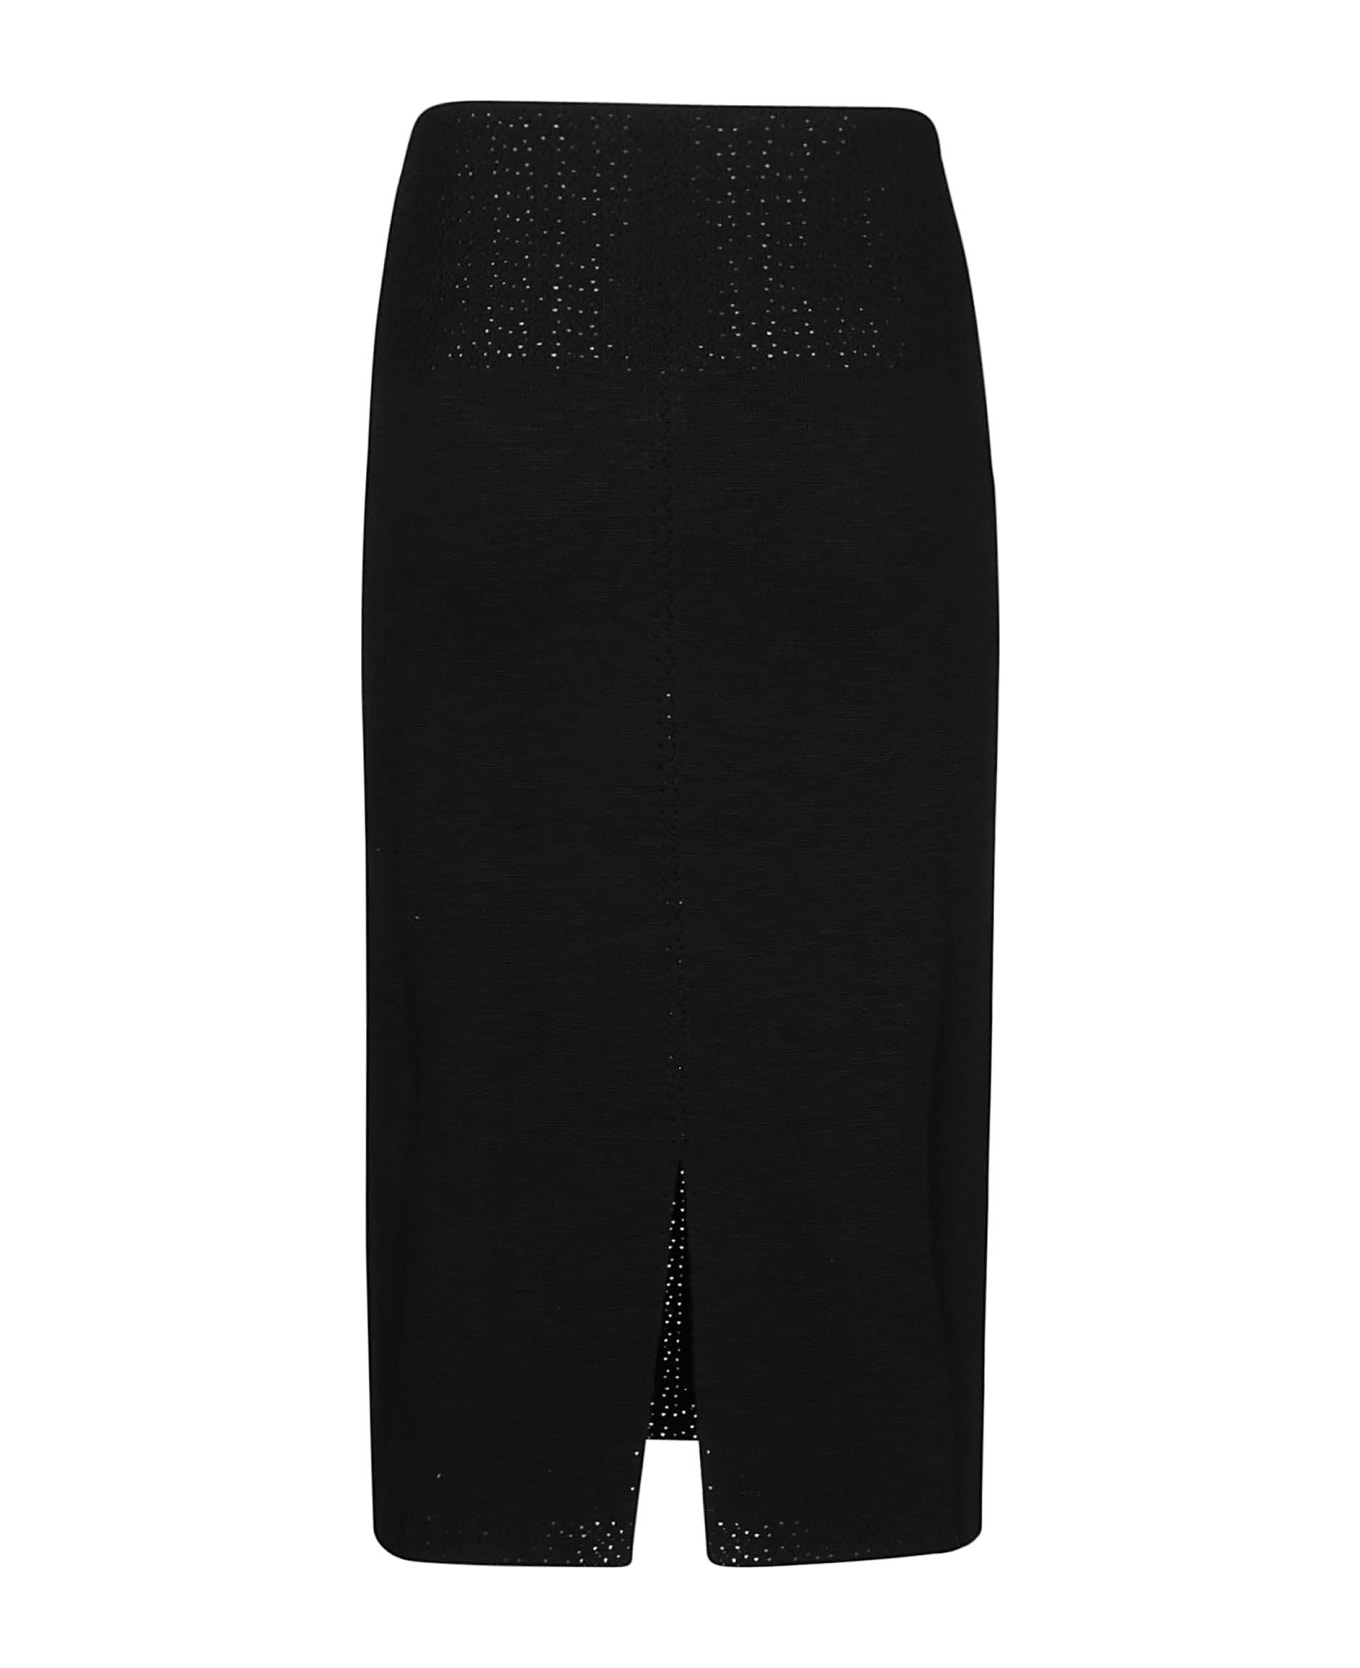 Victoria Beckham Fitted Midi Skirt - Black